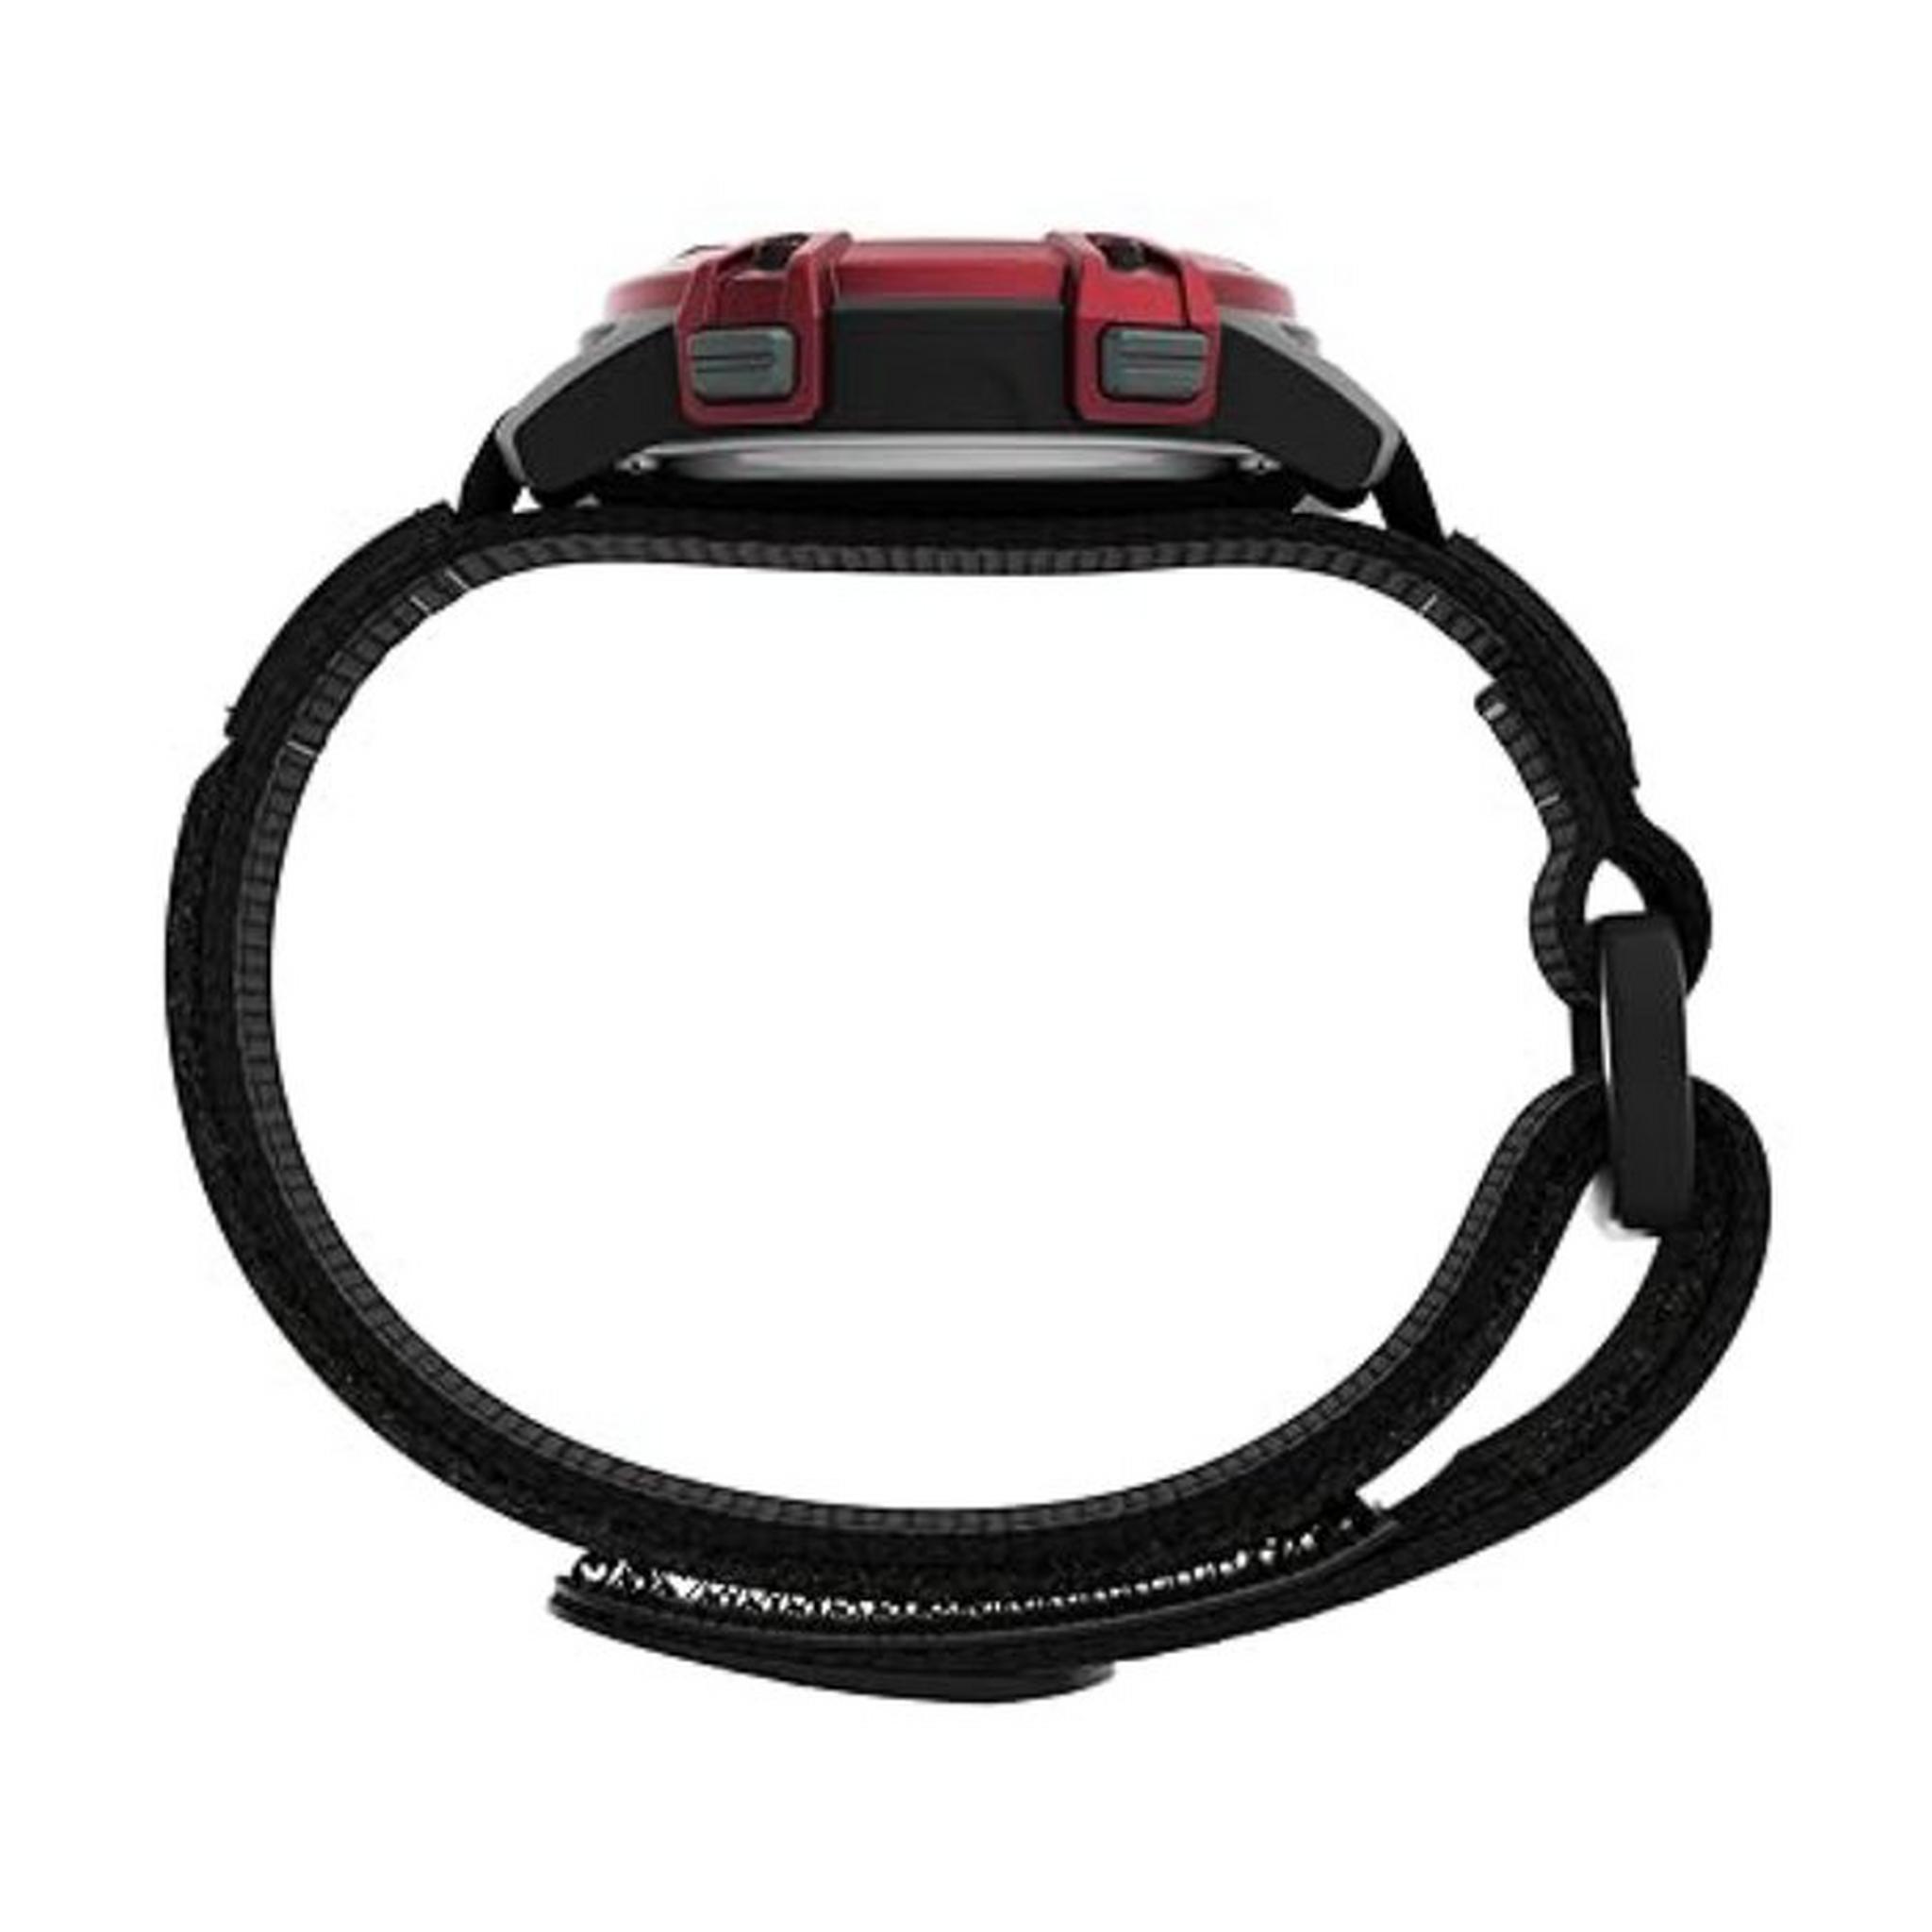 Timex Expedition CAT Unisex Watch, Digital, 33mm, Fabric Strap, TW4B29000VM – Black